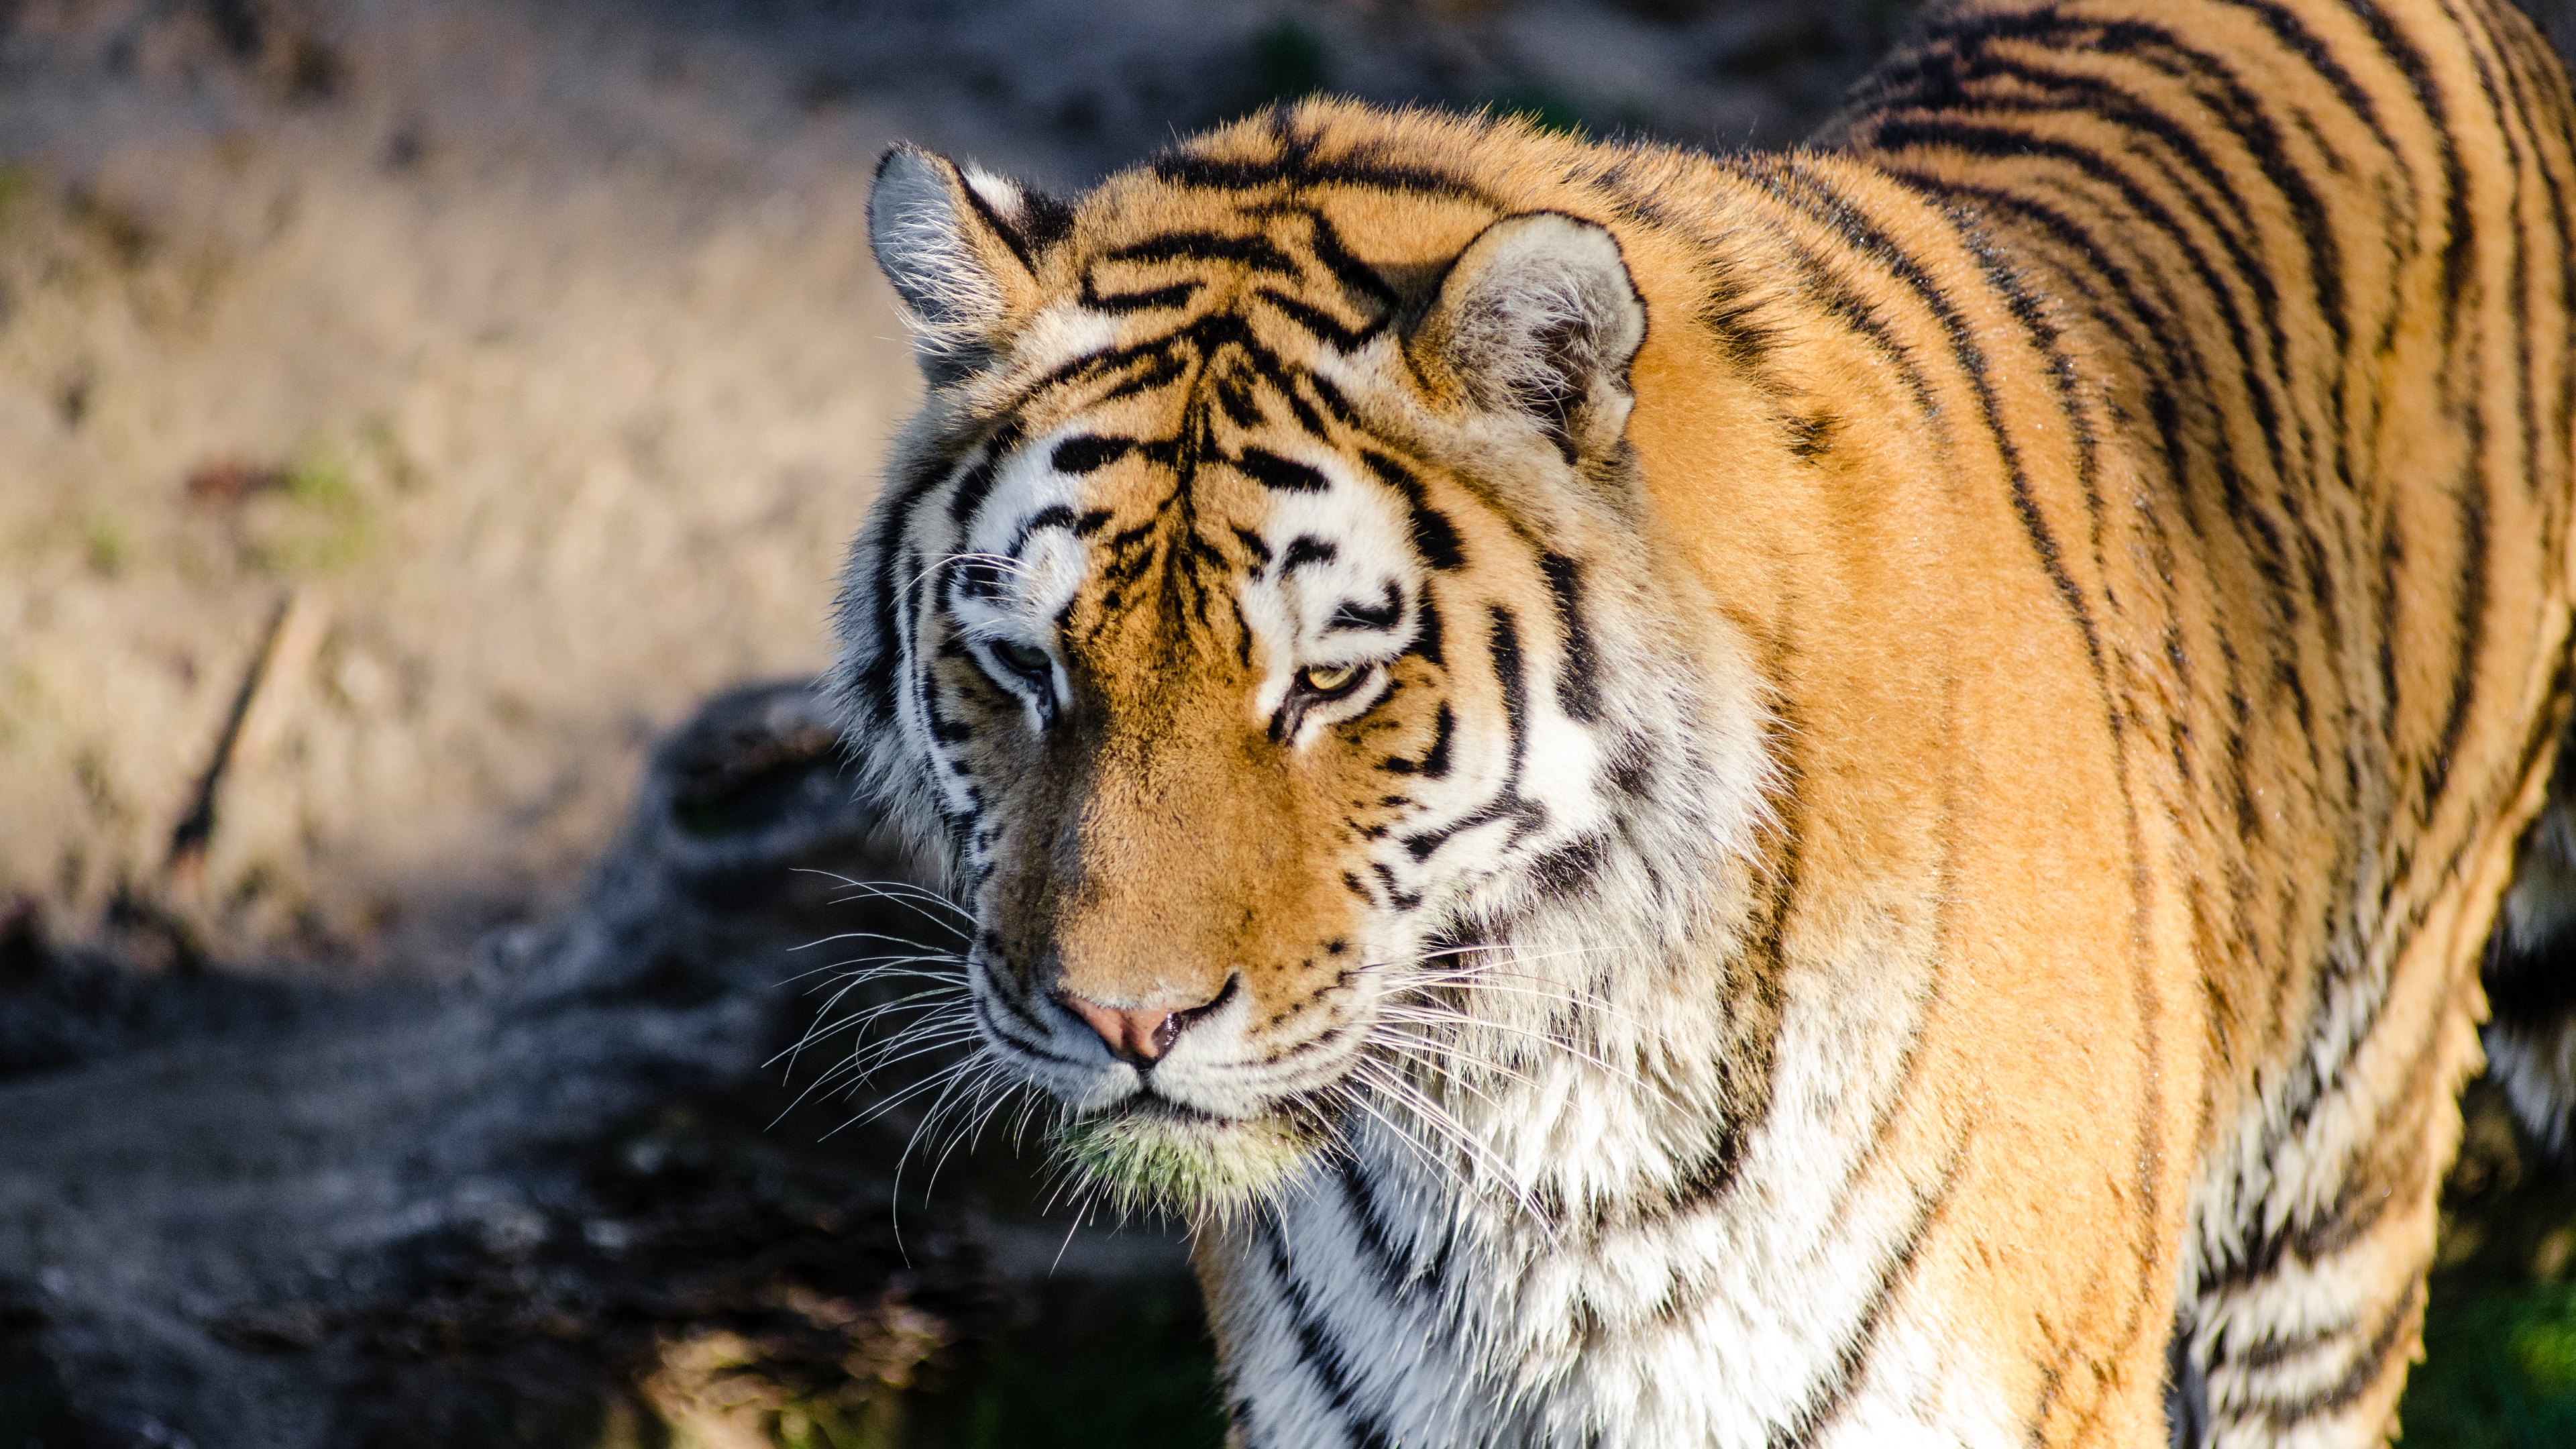  Siberian  Tiger 4k Ultra HD Wallpaper Background Image 